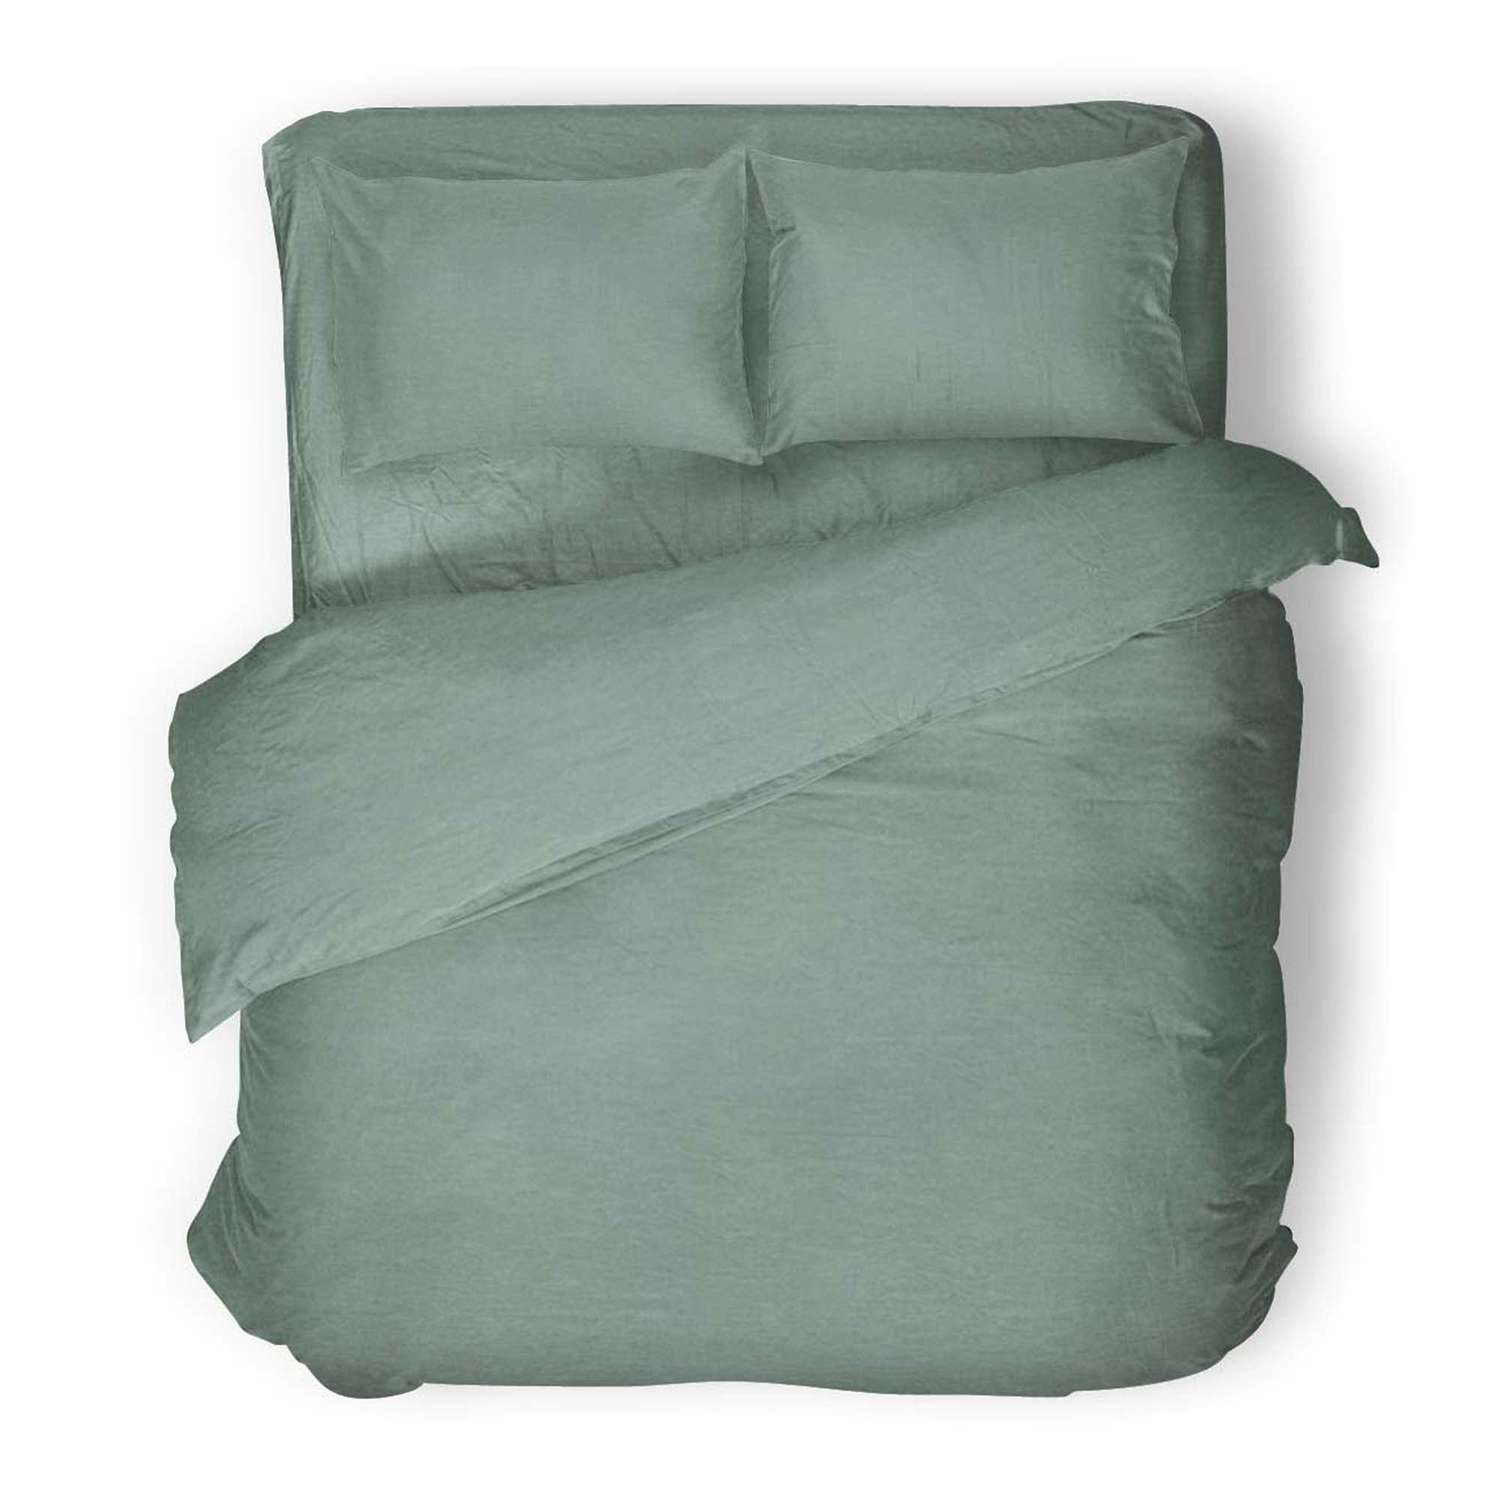 Комплект постельного белья Absolut 2СП Emerald наволочки 50х70см меланж - фото 1